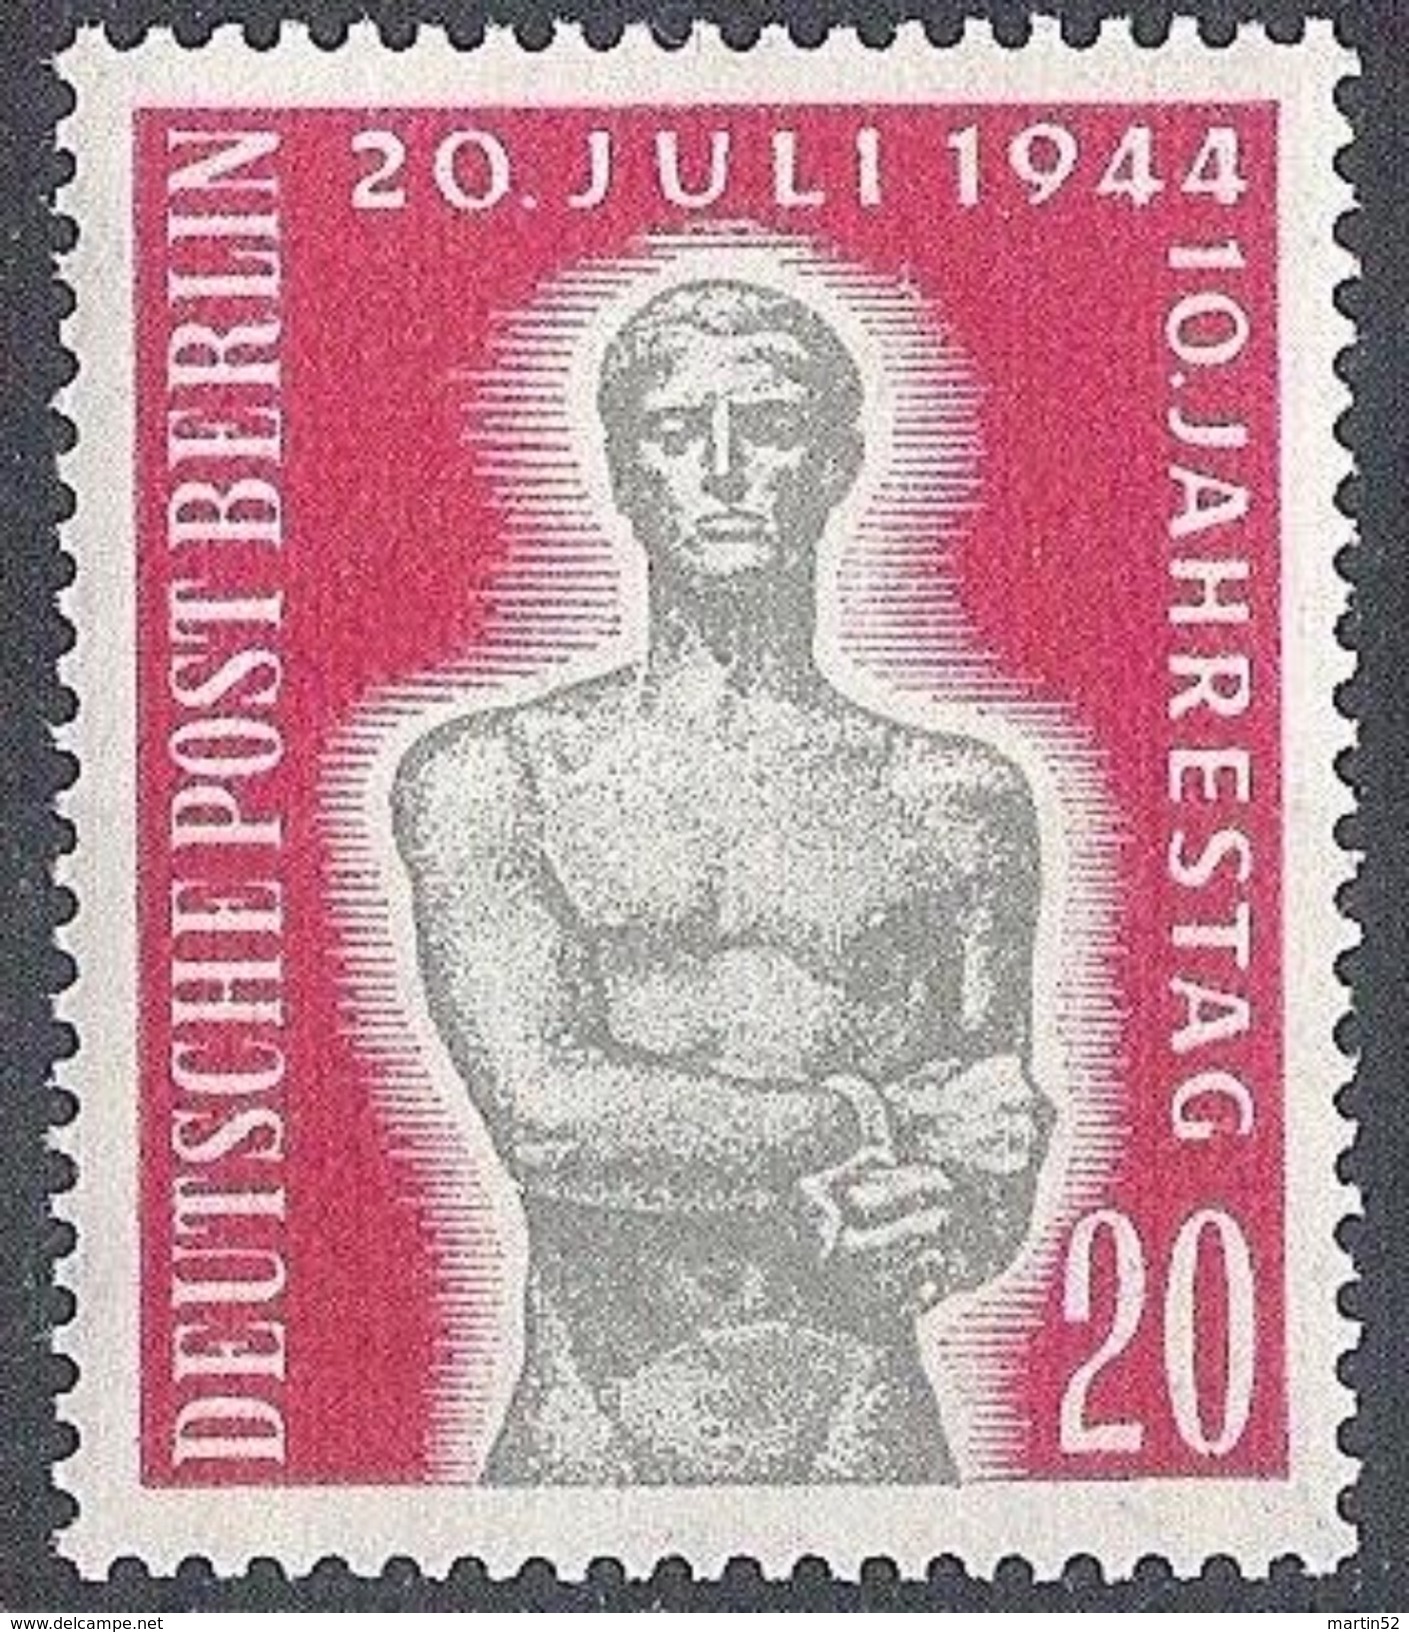 Berlin 1954: "20 JULI 1944" (Denkmal) Michel-Nr. 119 ** Postfrisch MNH (Michel 6.50 Euro) - Denkmäler